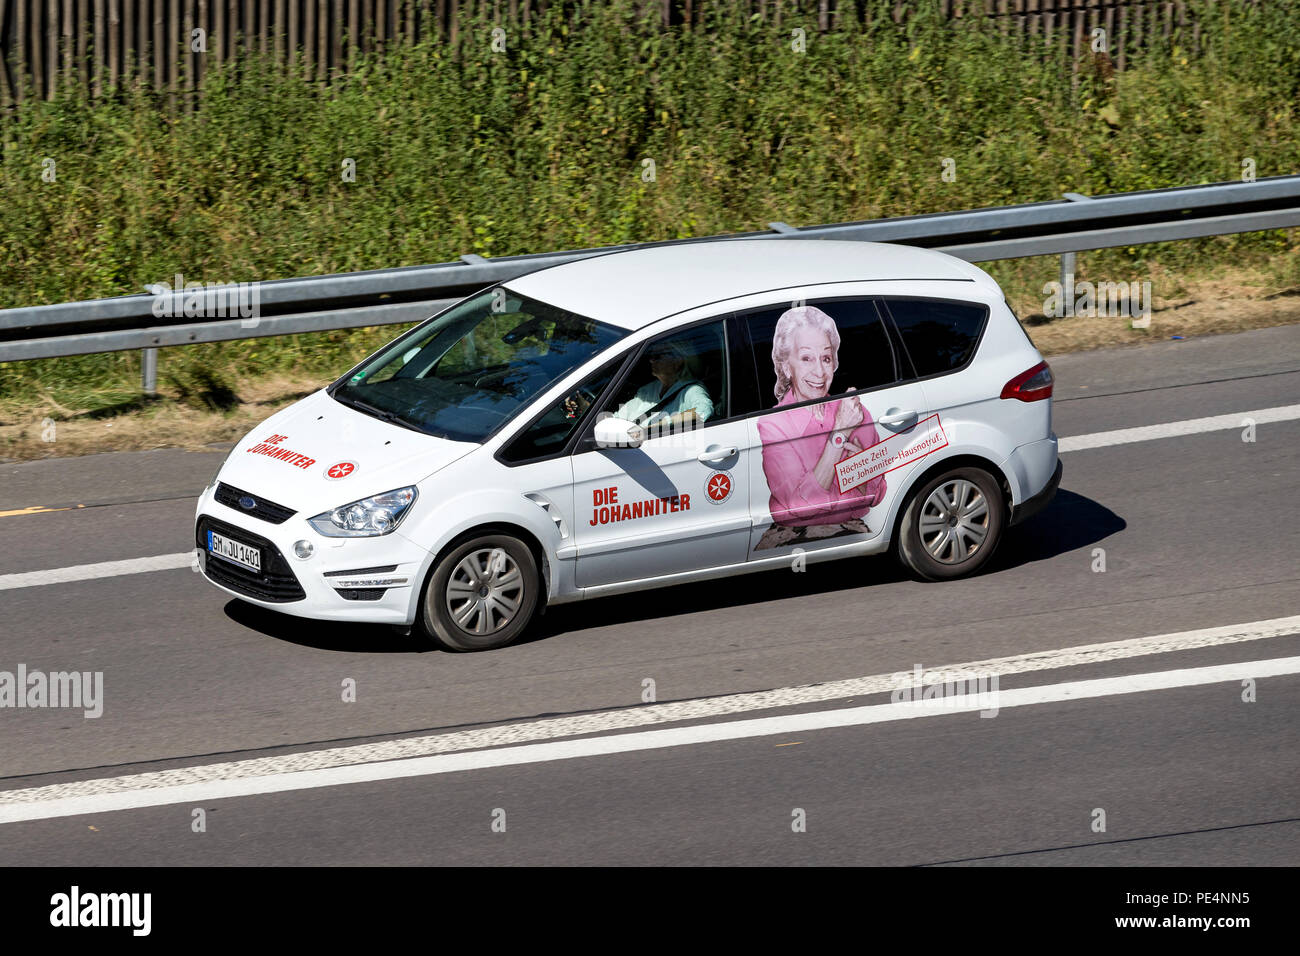 Johanniter car on motorway. Die Johanniter is a voluntary humanitarian organisation. Stock Photo